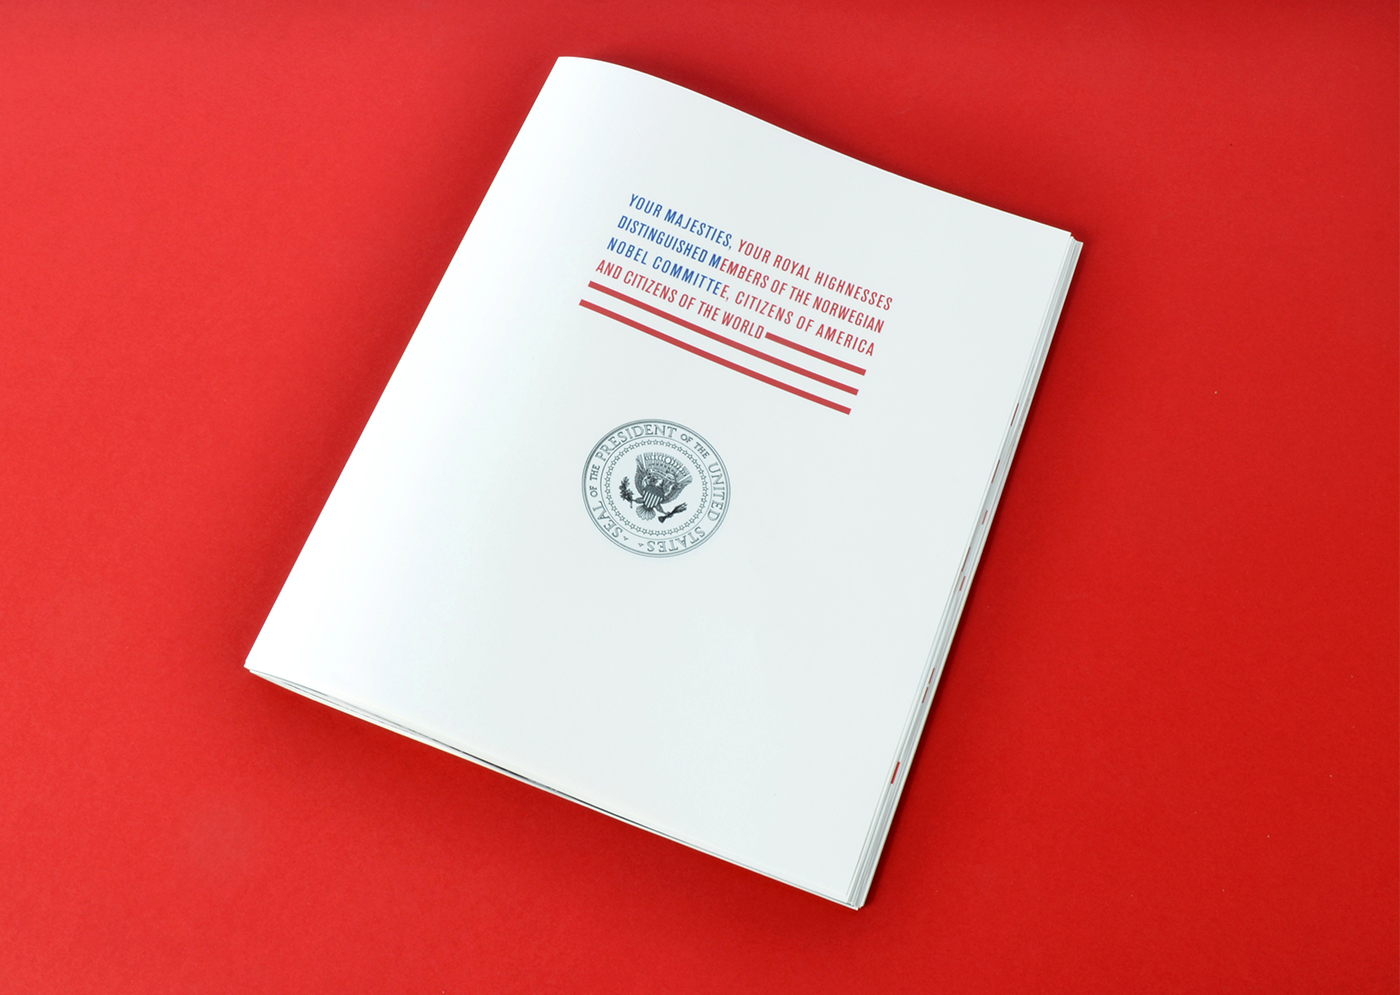 Istd 2016 istd Layout Barack Obama Nobel Prize president politics book american american flag obama usa campaign War guantanimo